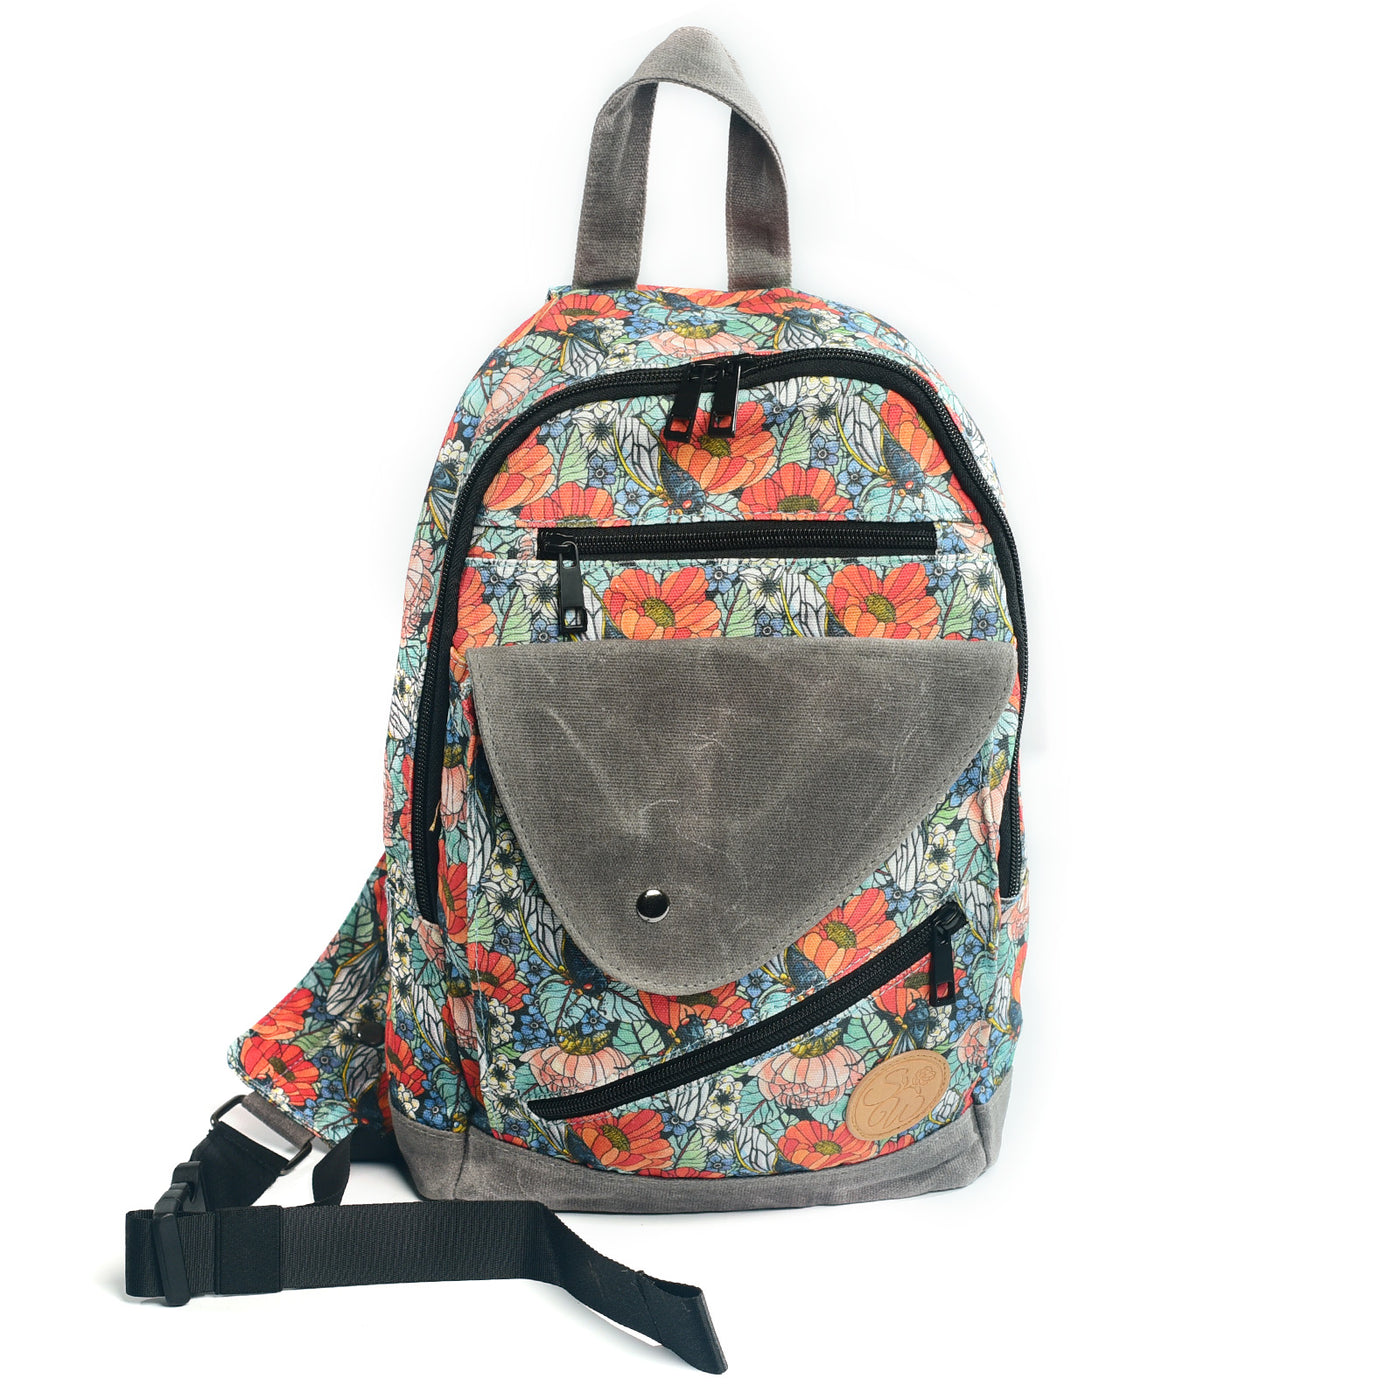 Sling backpack Purse Native Southwestern Style - Mini Crossbody  Rucksack,Hippie Sling bag, Phone Holster bag,Small Backpack gift idea